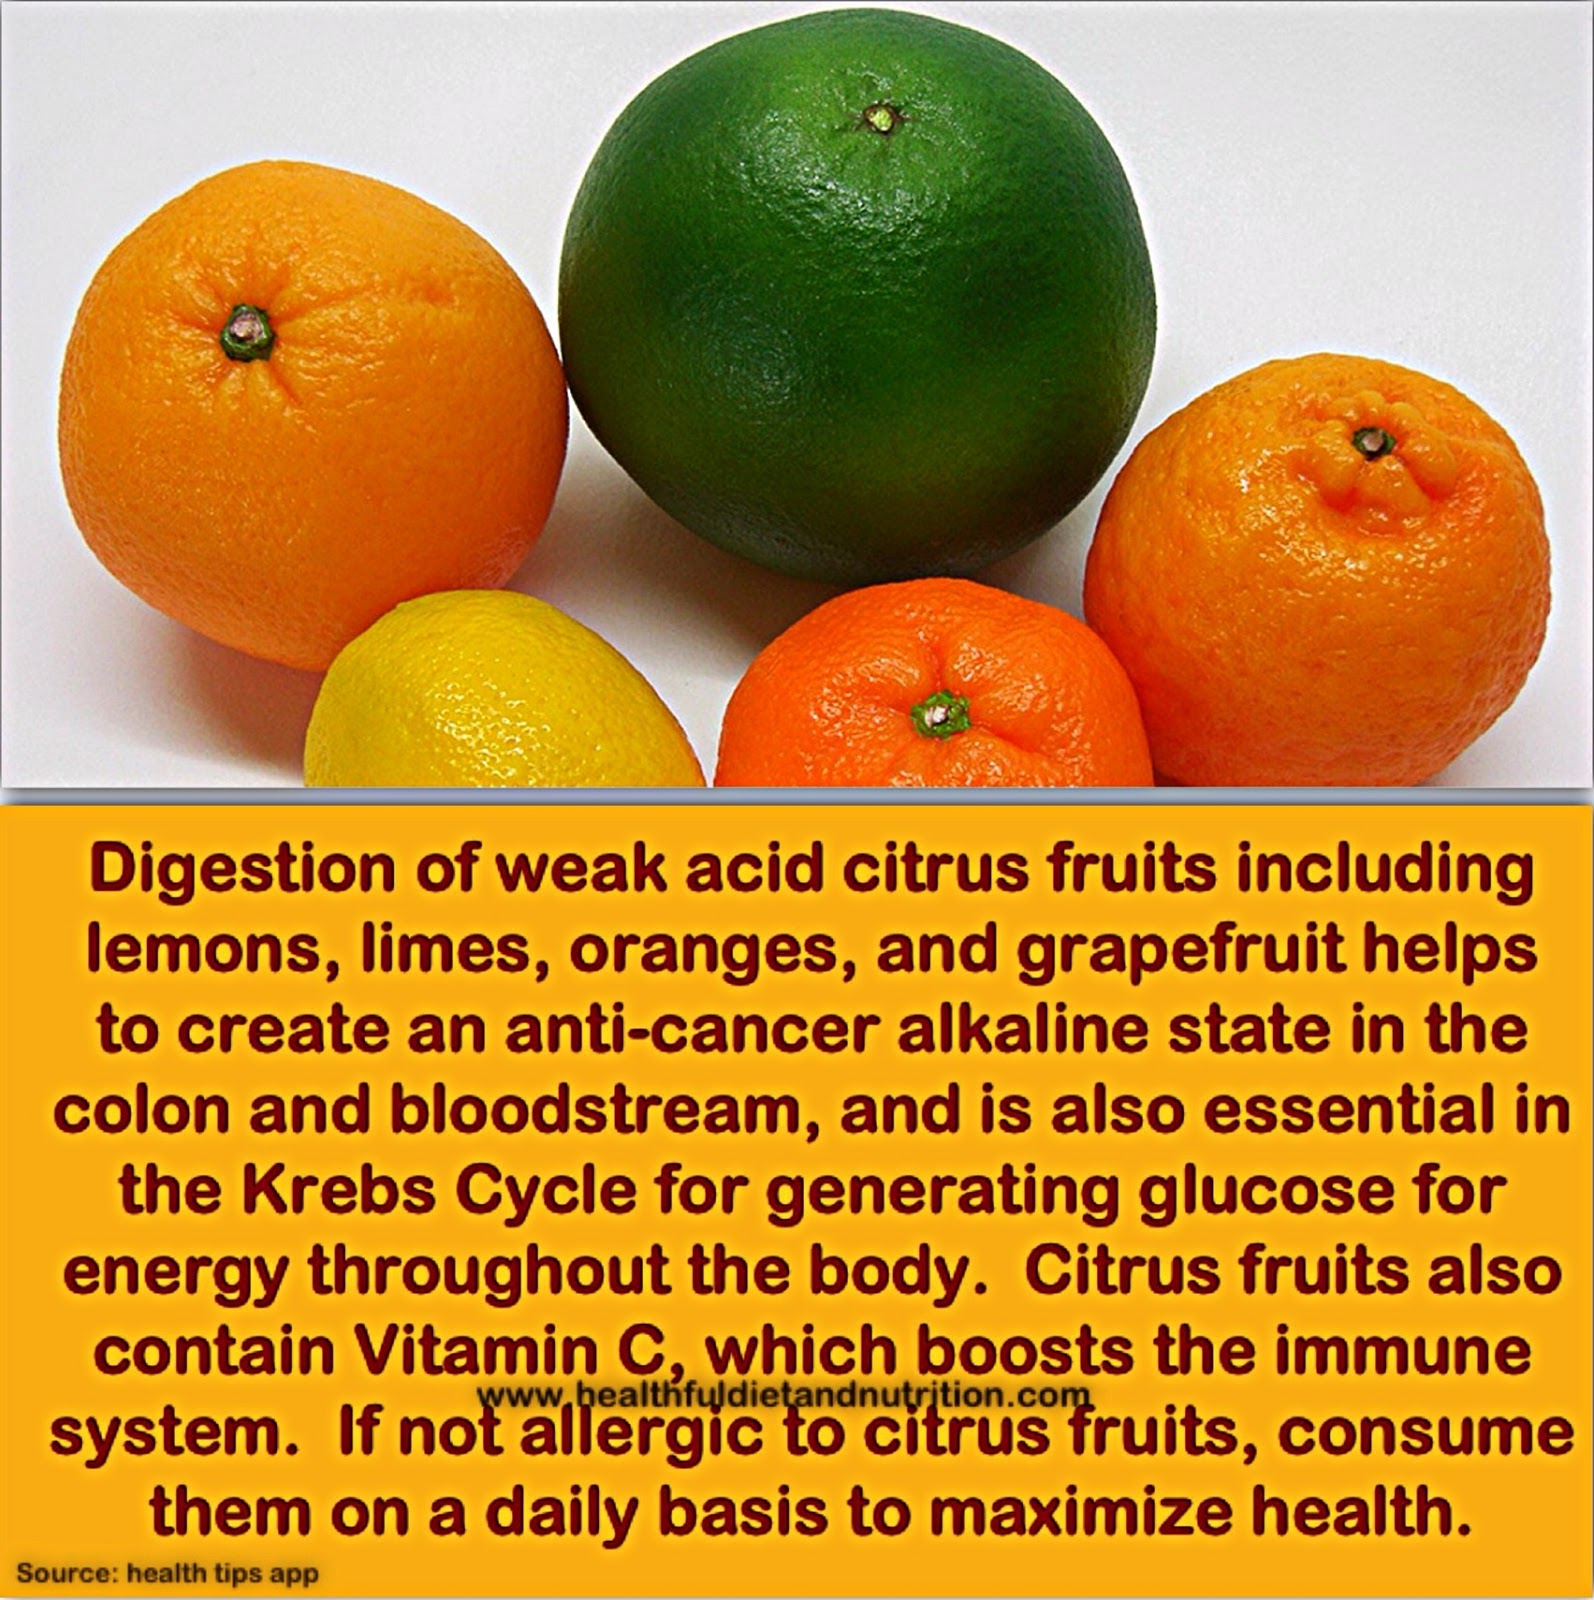 Consume Citrus Fruits To Maximize Health